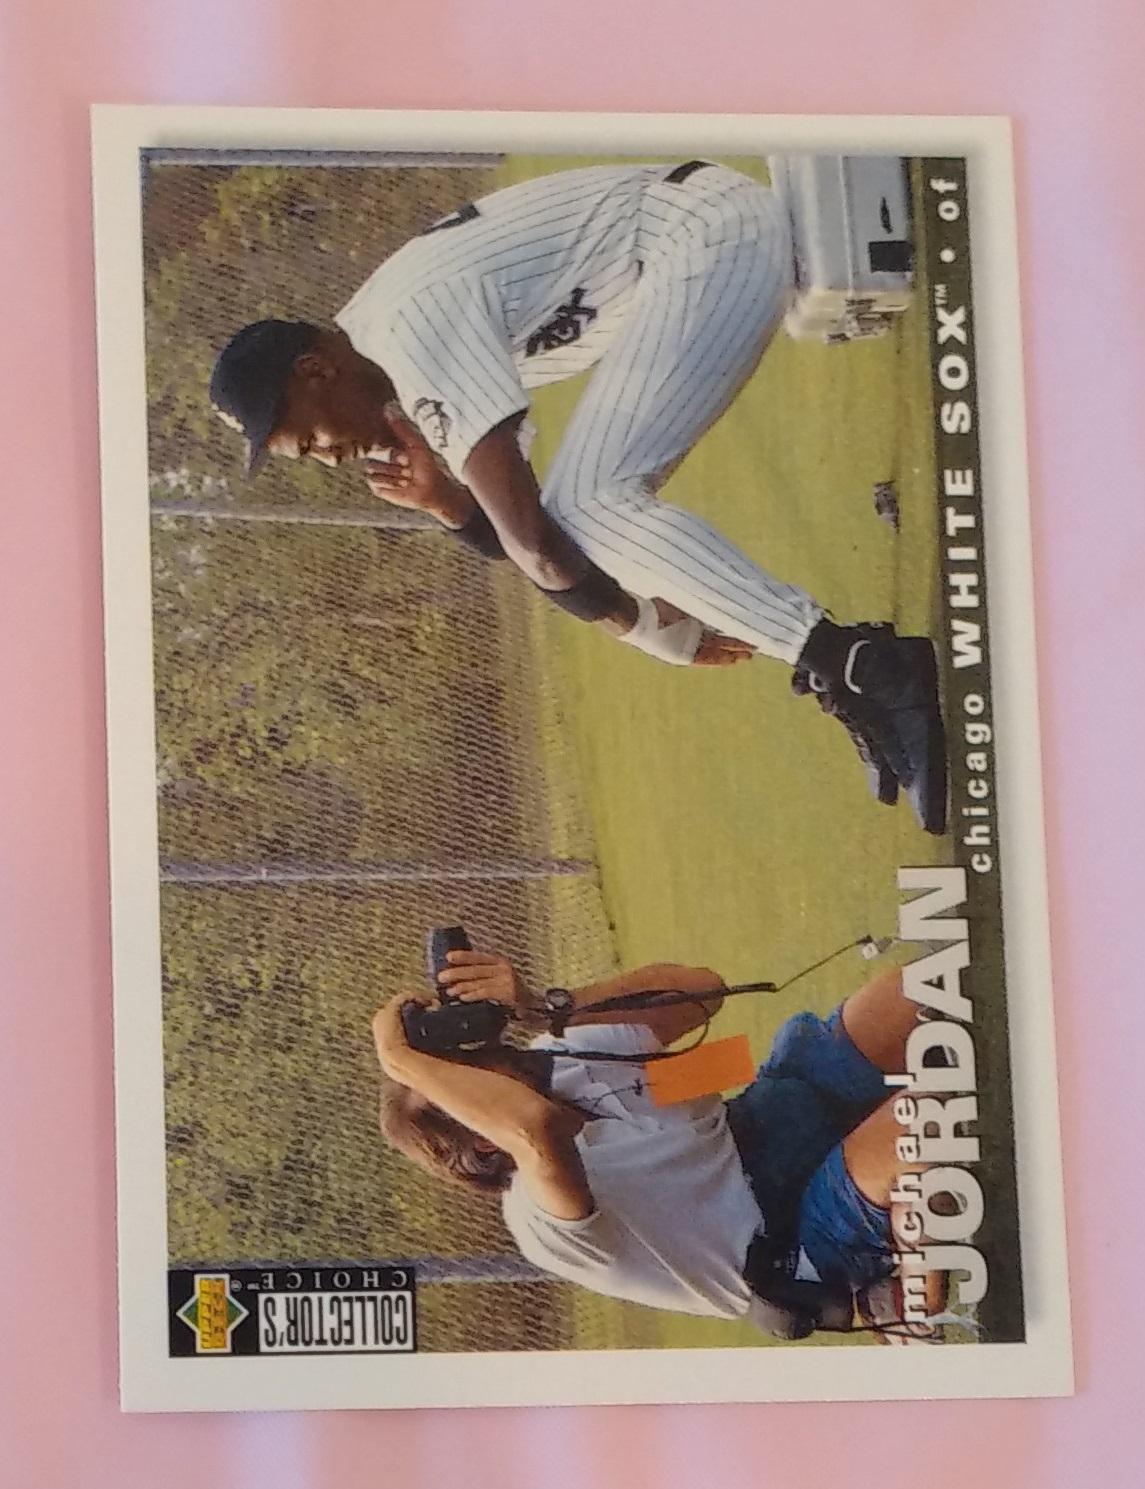 1995 Upper Deck Collector's Choice MLB Baseball Card #500 Michael Jordan White Sox NBA Basketball